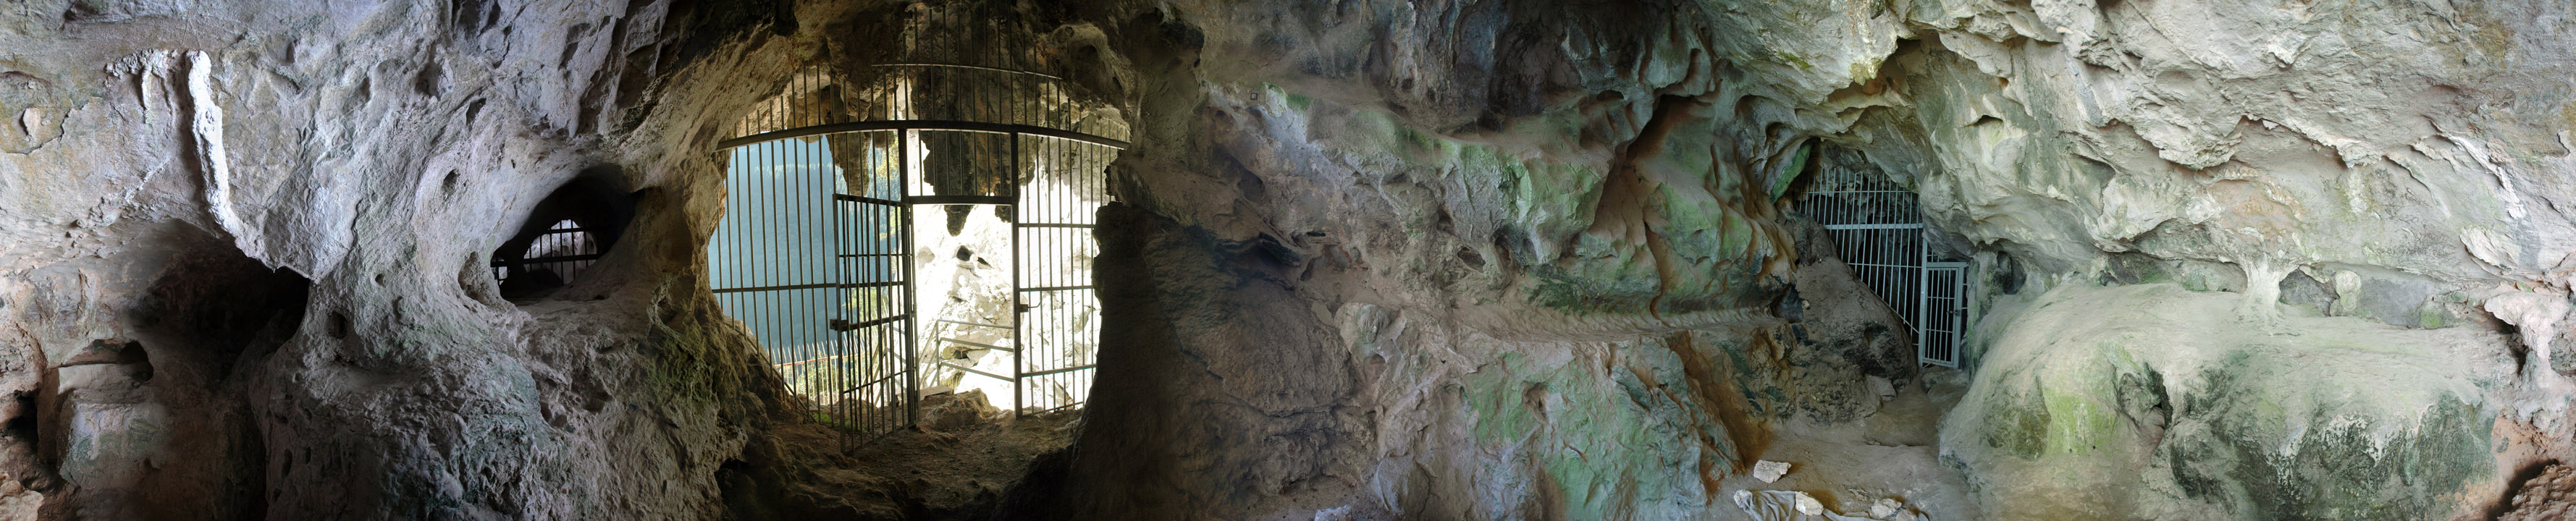 Panorama de la cueva